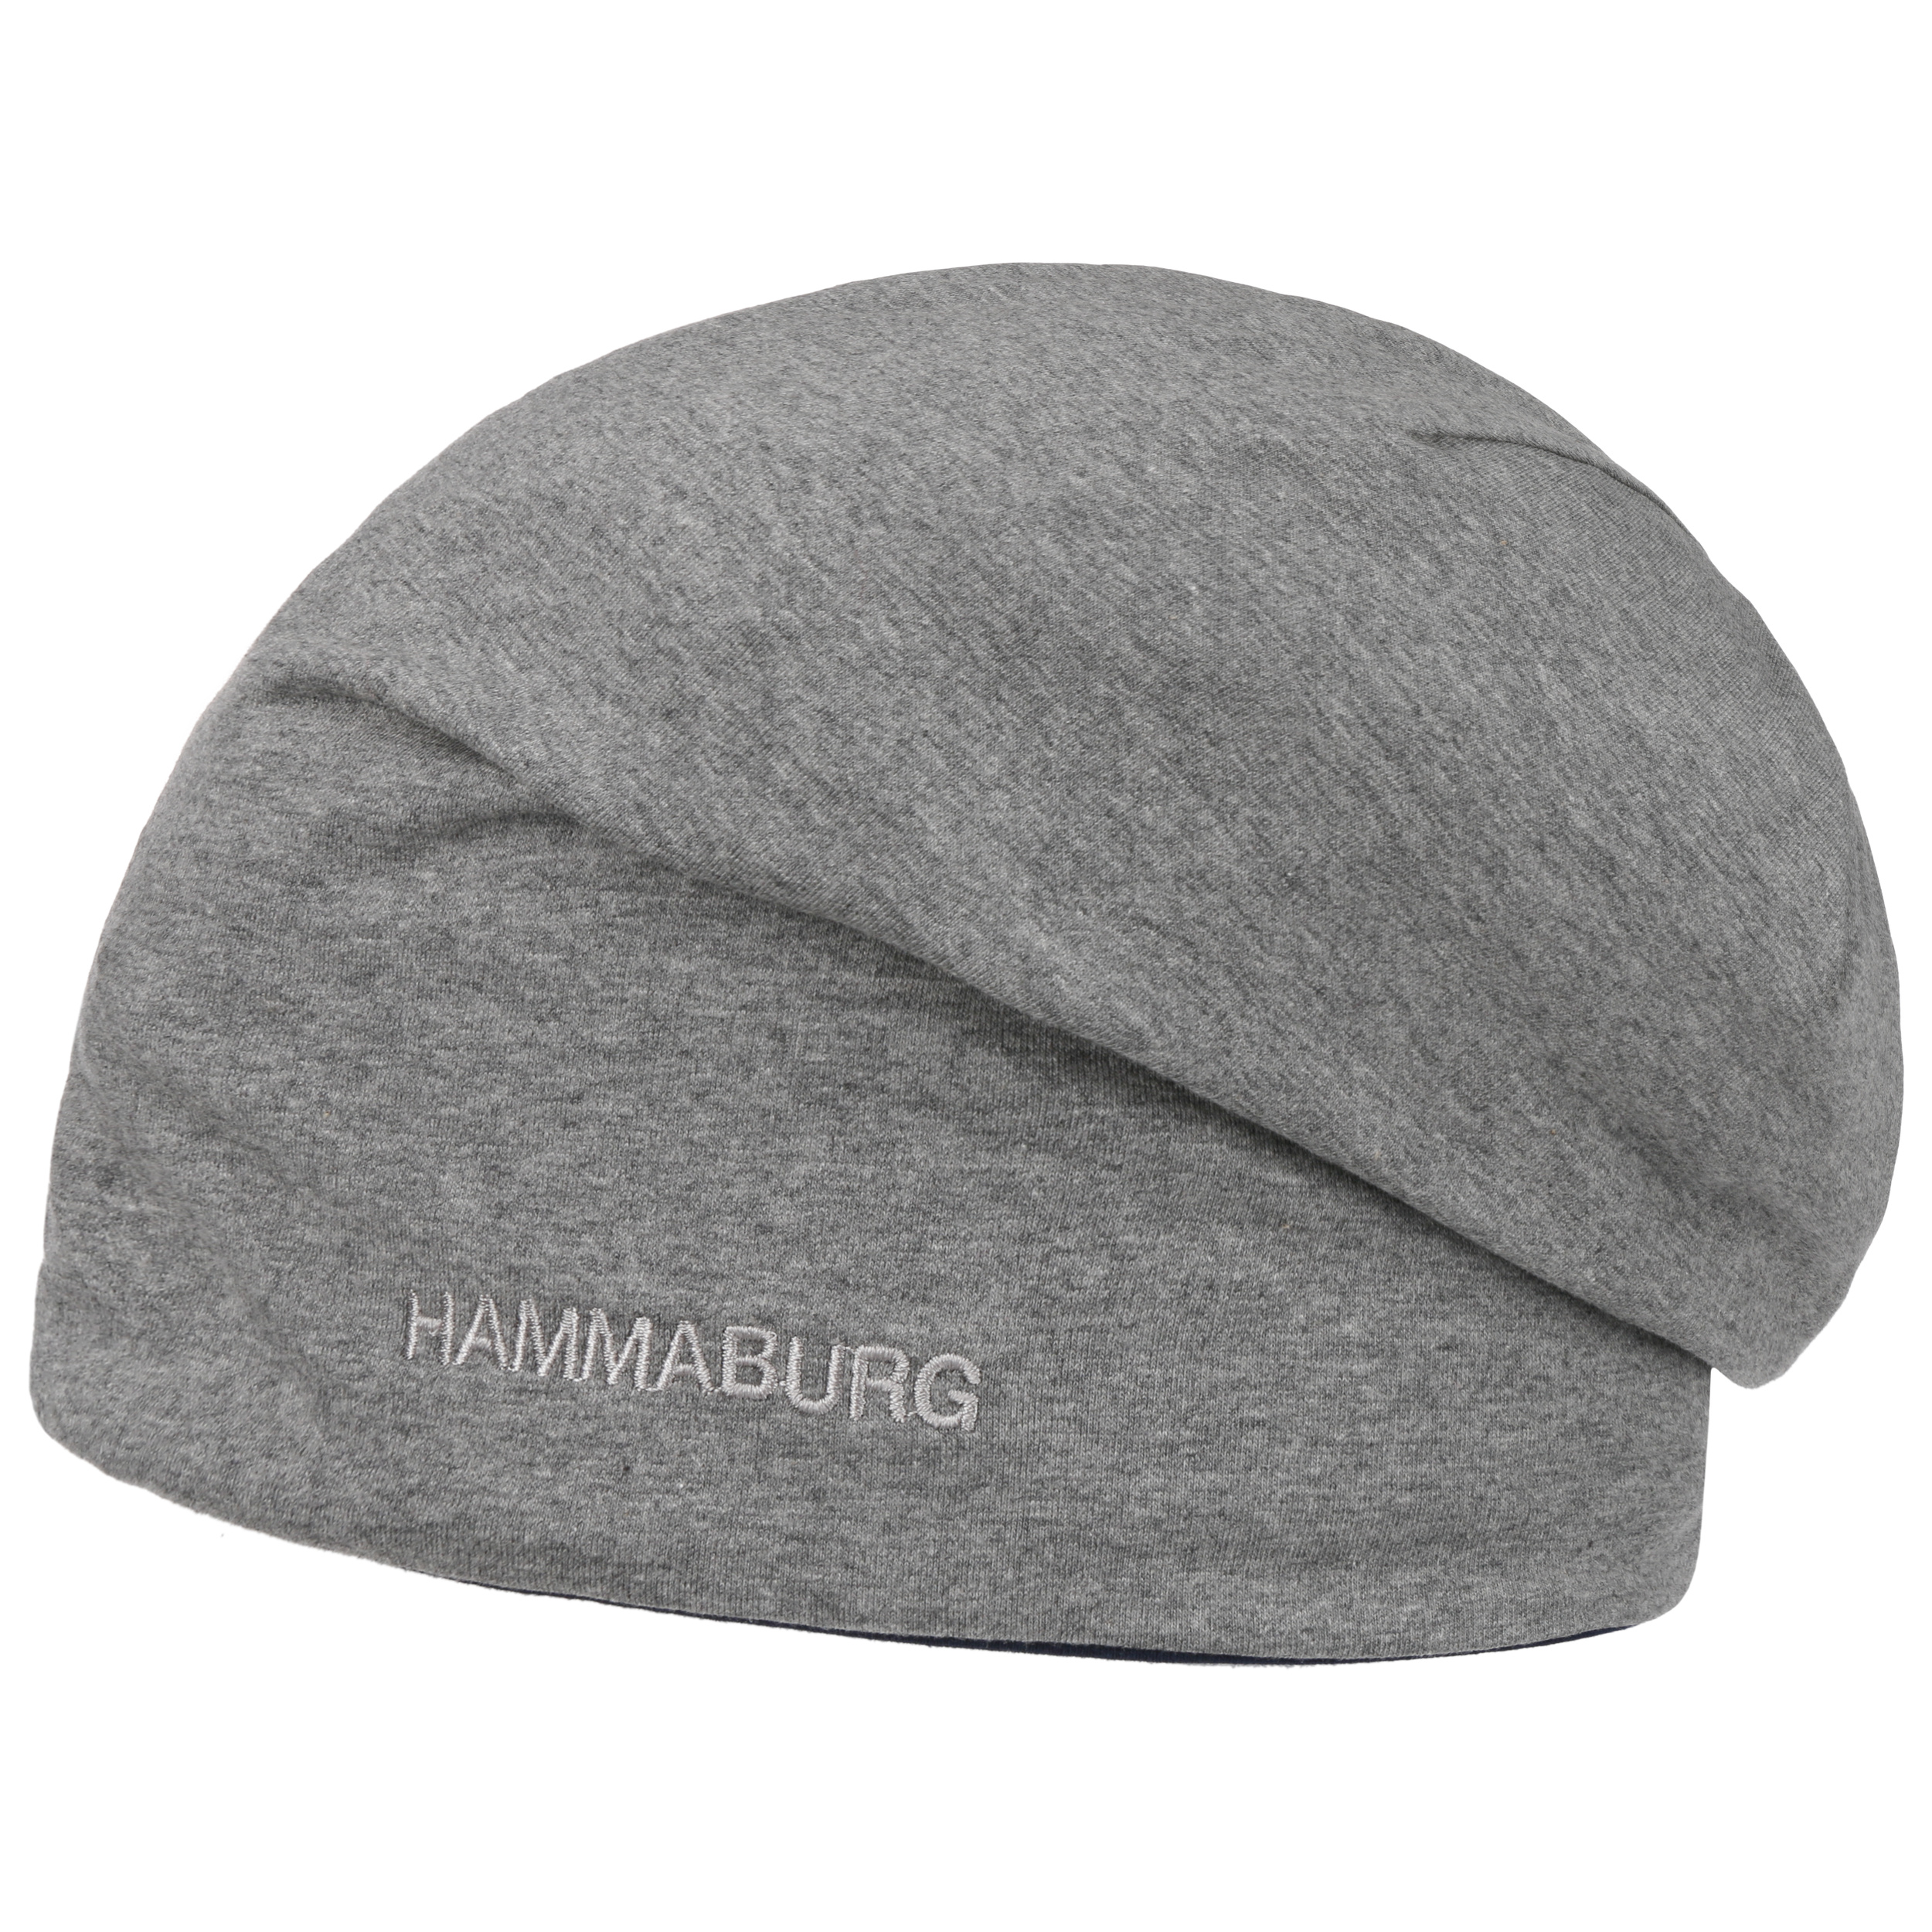 & Hatshopping by Beanies Beanie Shop ▷ Reversible Caps Hats, Hammaburg --> online Long